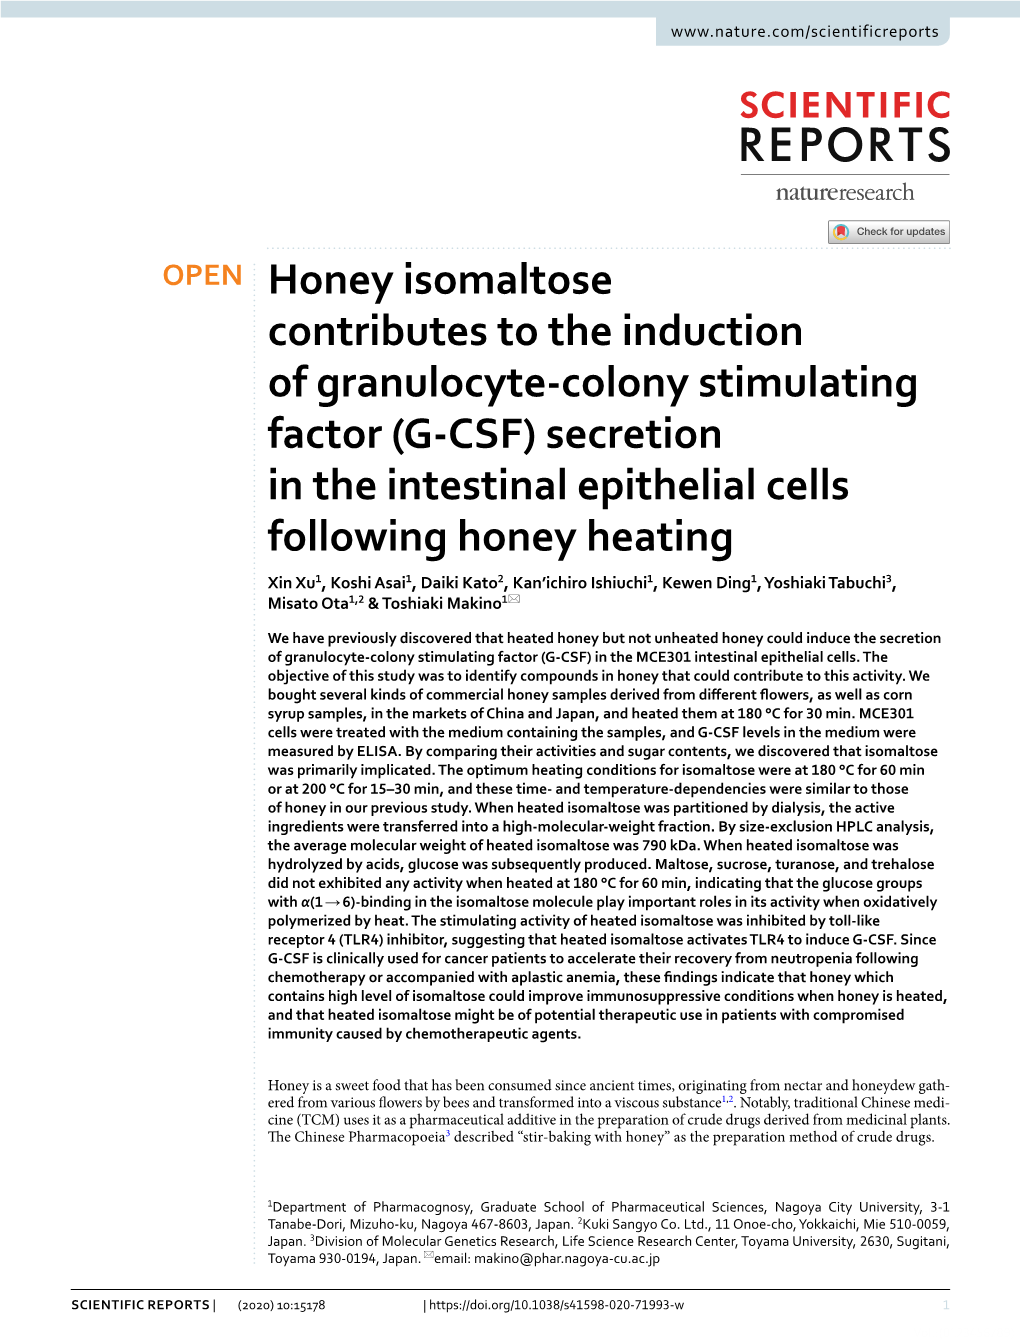 Honey Isomaltose Contributes to the Induction of Granulocyte-Colony